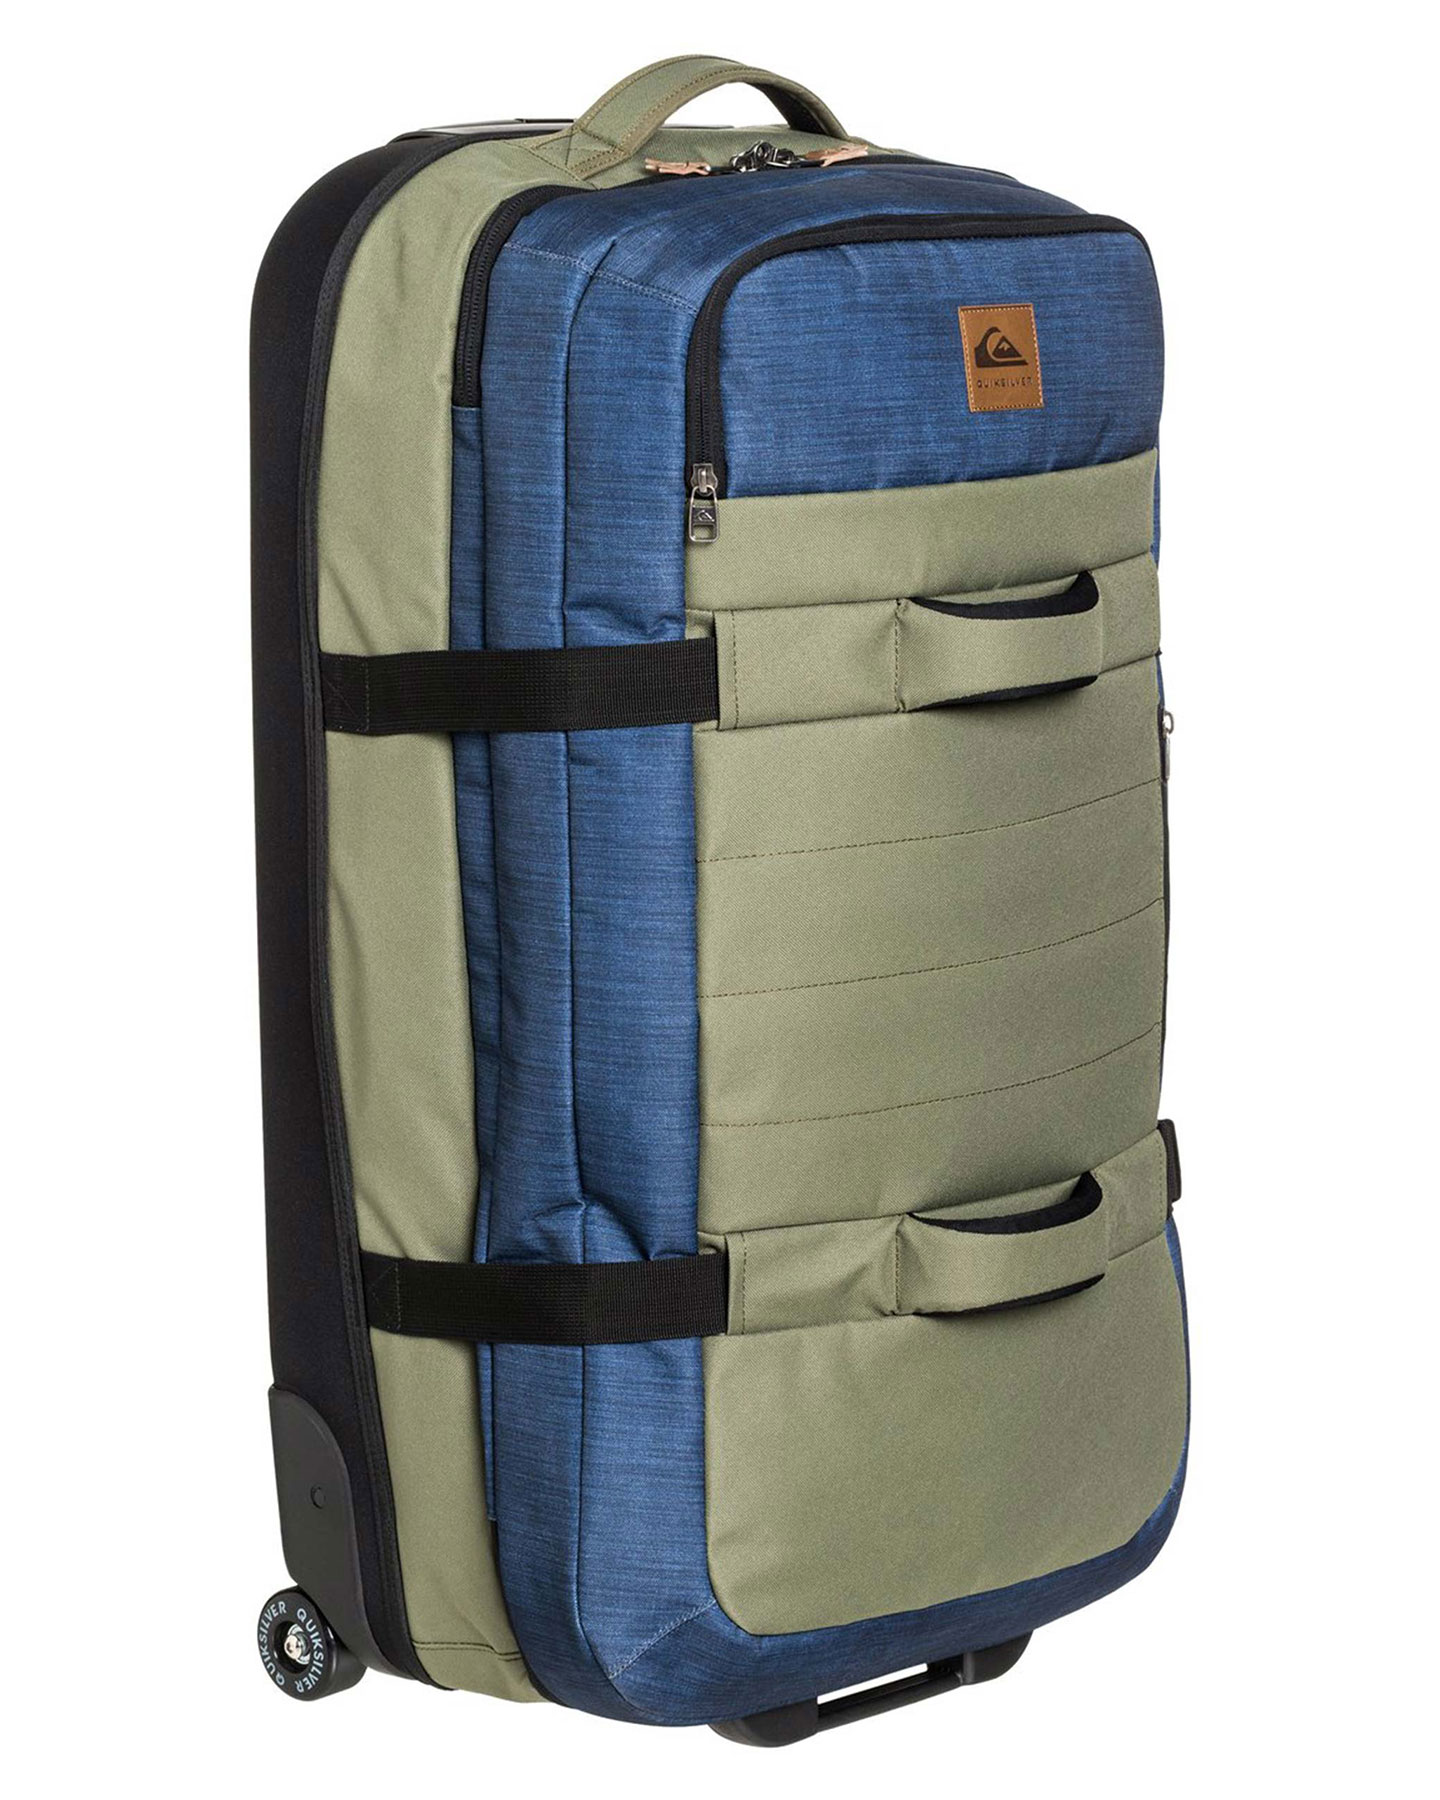 100 litre wheeled travel bag